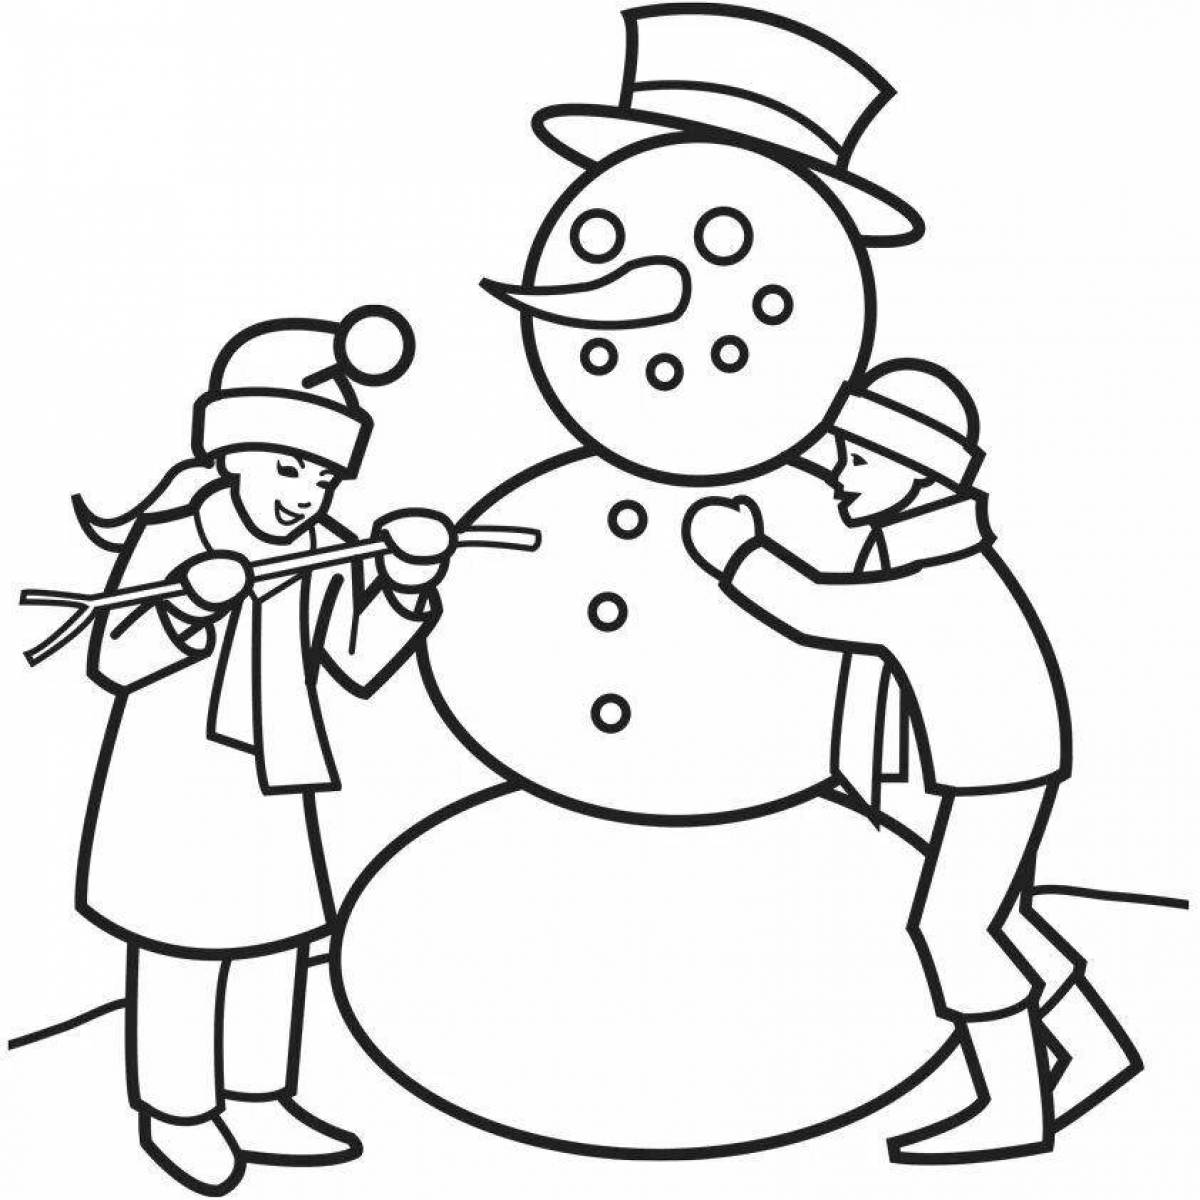 Joyful snowman coloring book